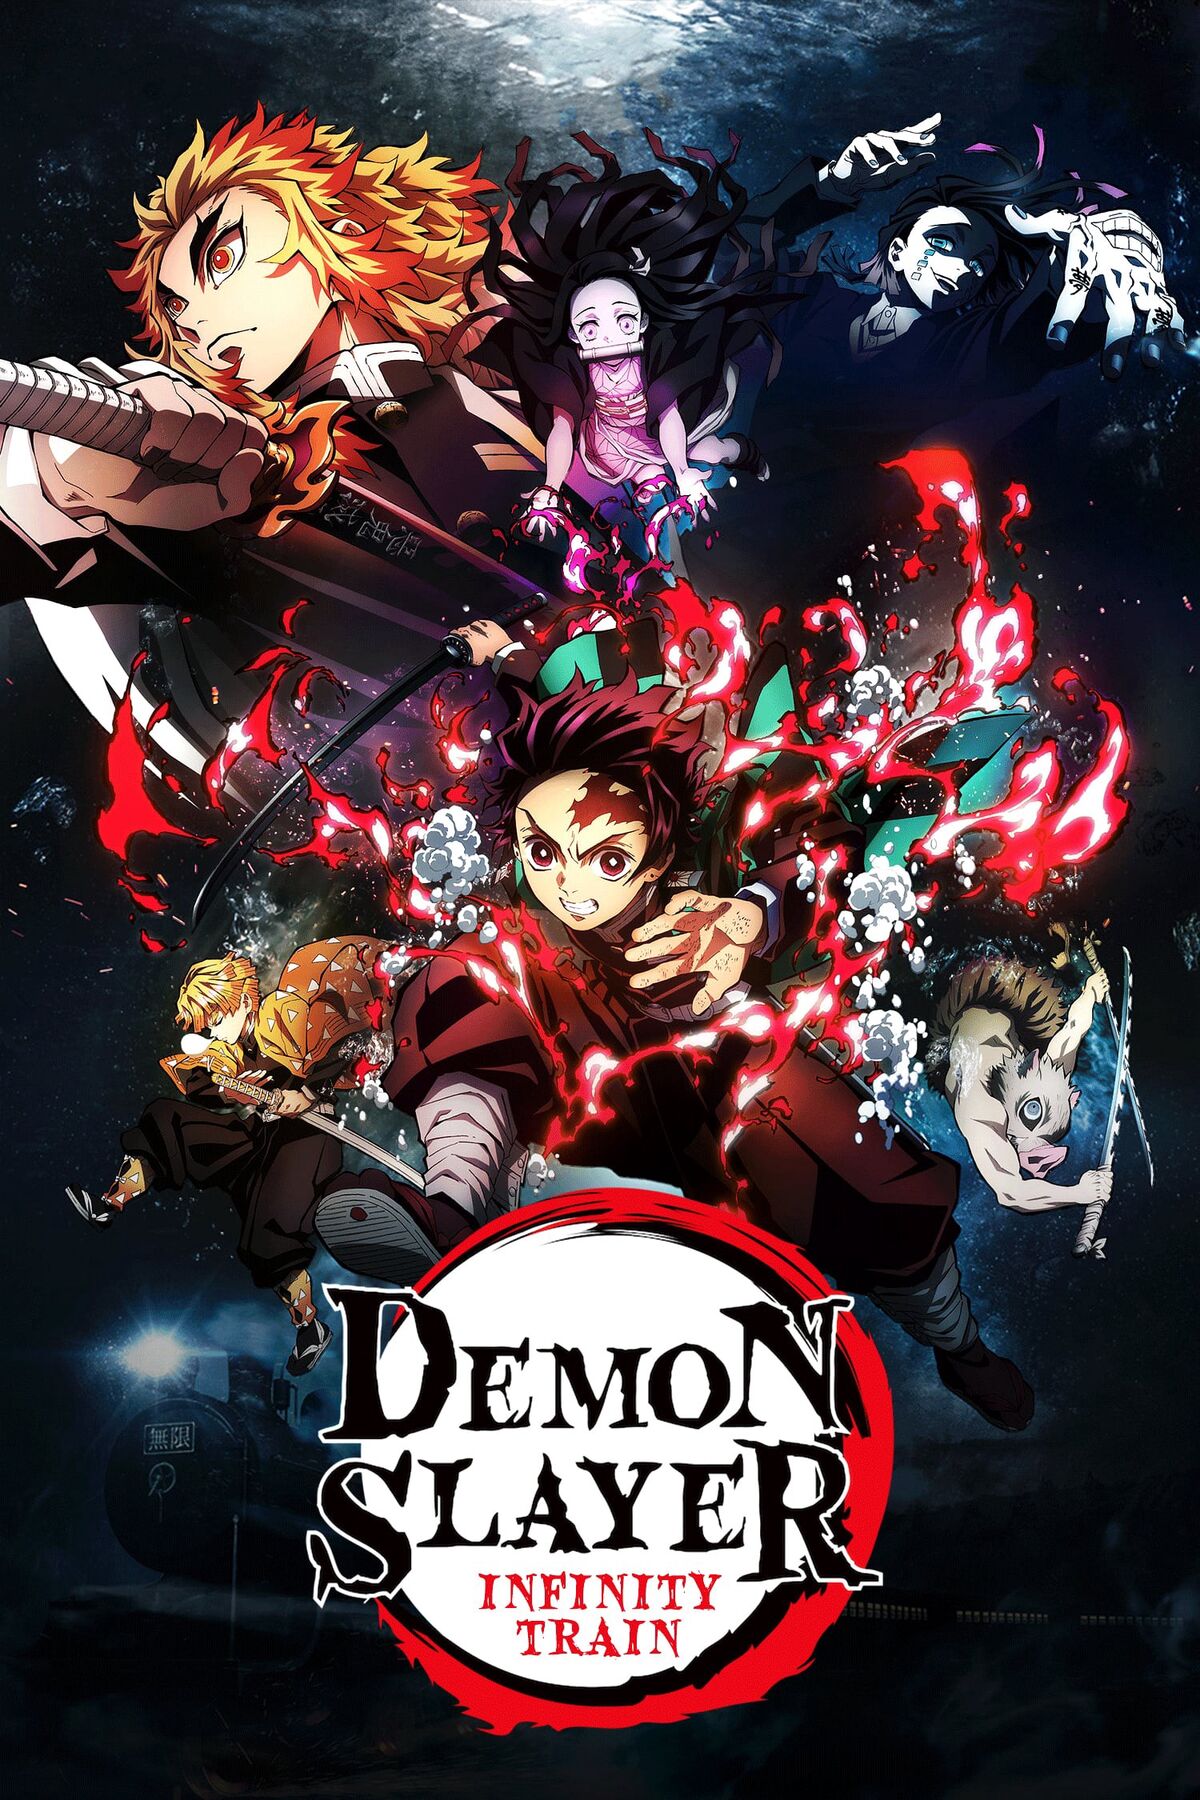 Demon Slayer: Kimetsu no Yaiba is a Japanese manga series written and  illustrated by Koyoharu Gotouge. It follows Tanjiro Kamado, a young boy who  wants to become a demon slayer after his